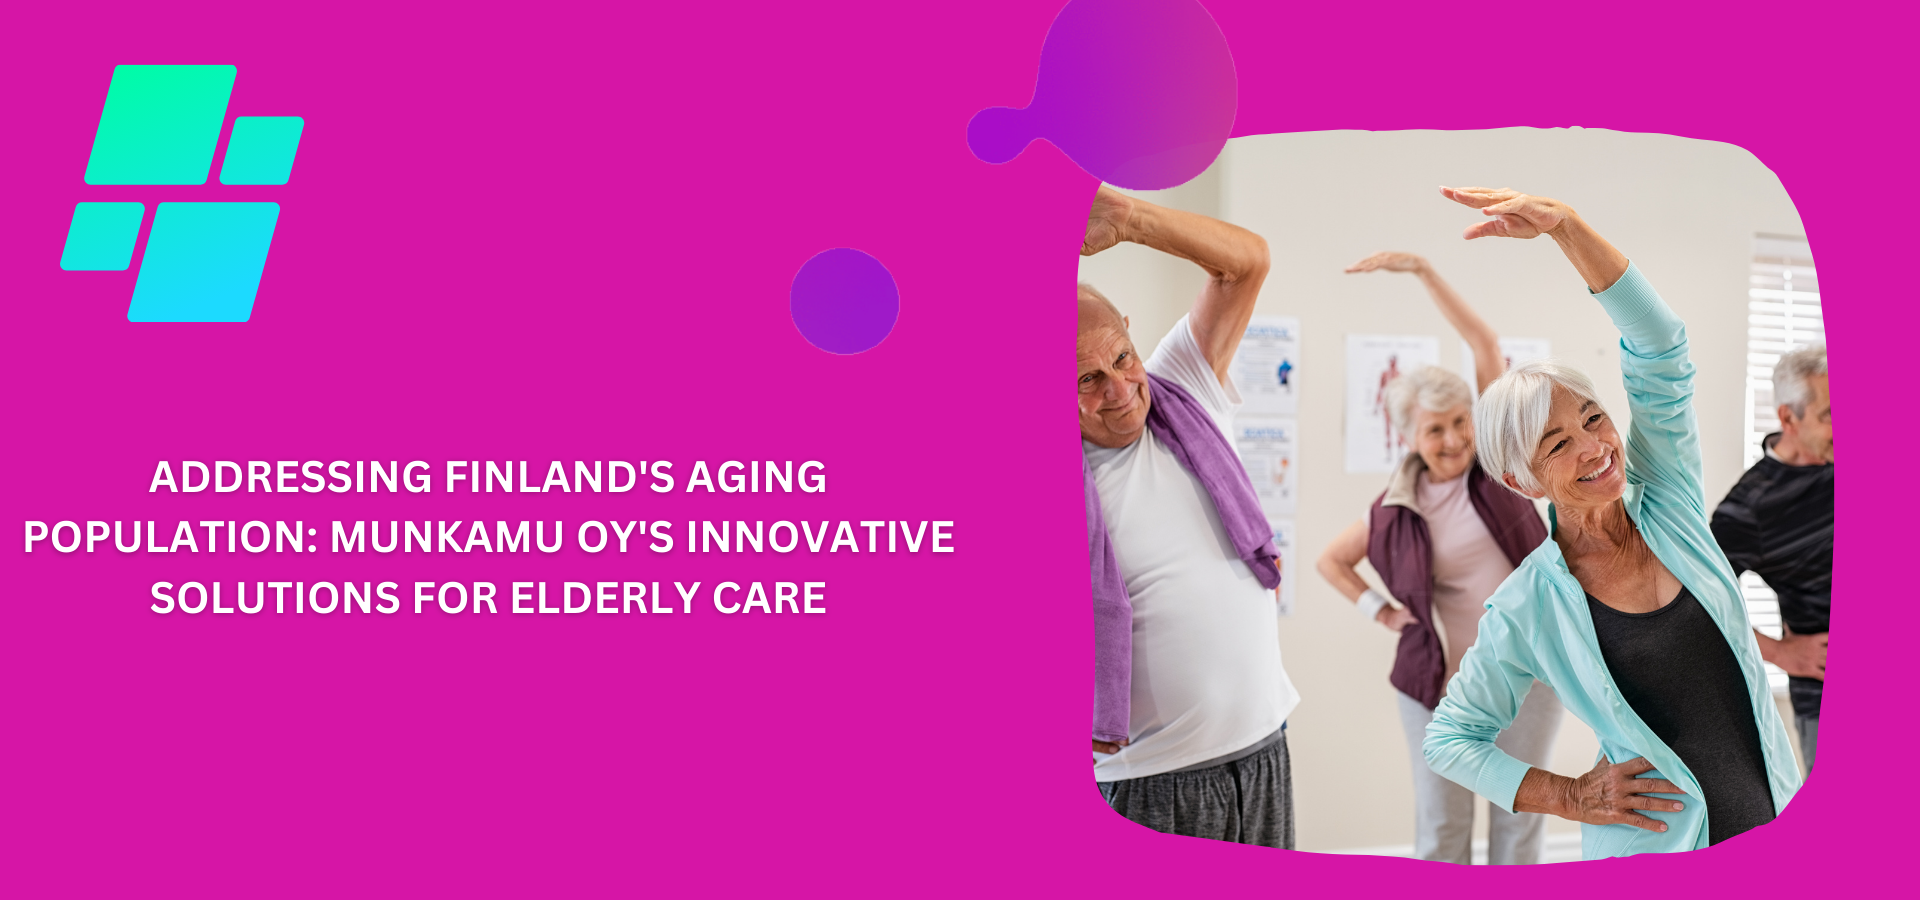 Addressing Finland’s Aging Population: MunKamu Oy’s Innovative Solutions for Elderly Care